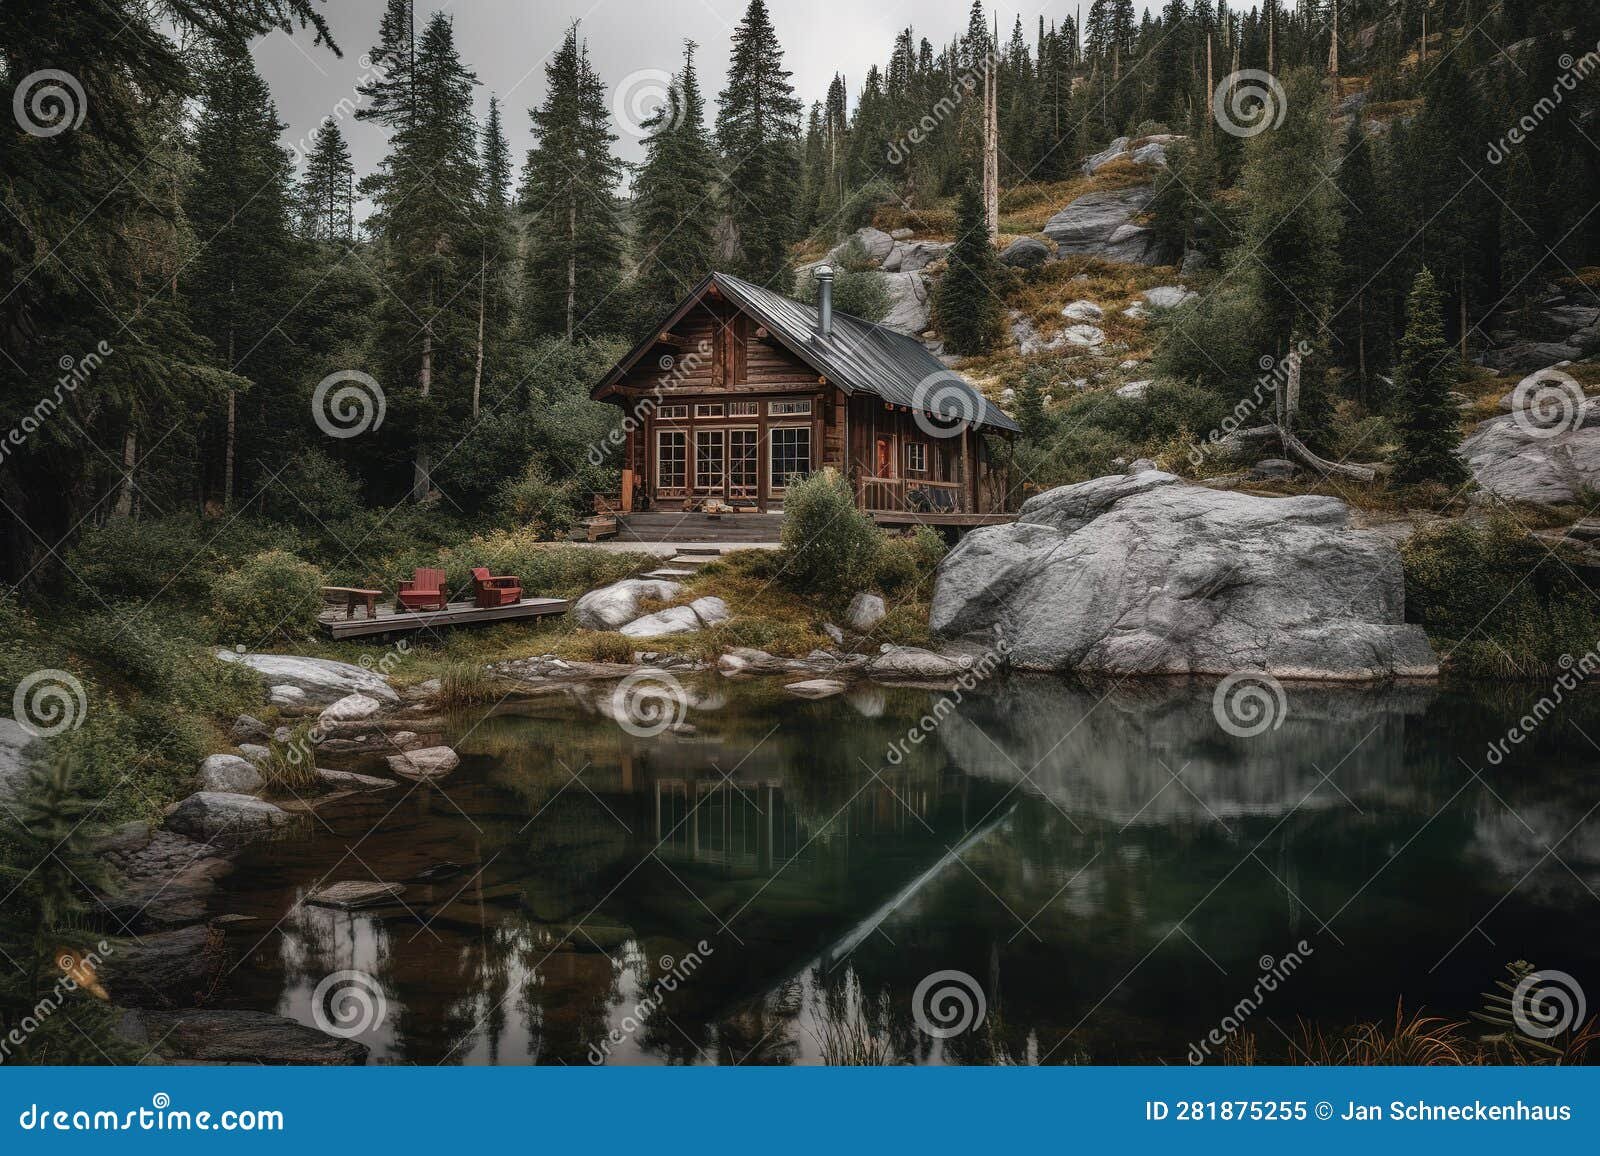 cabana acogedora en la montana